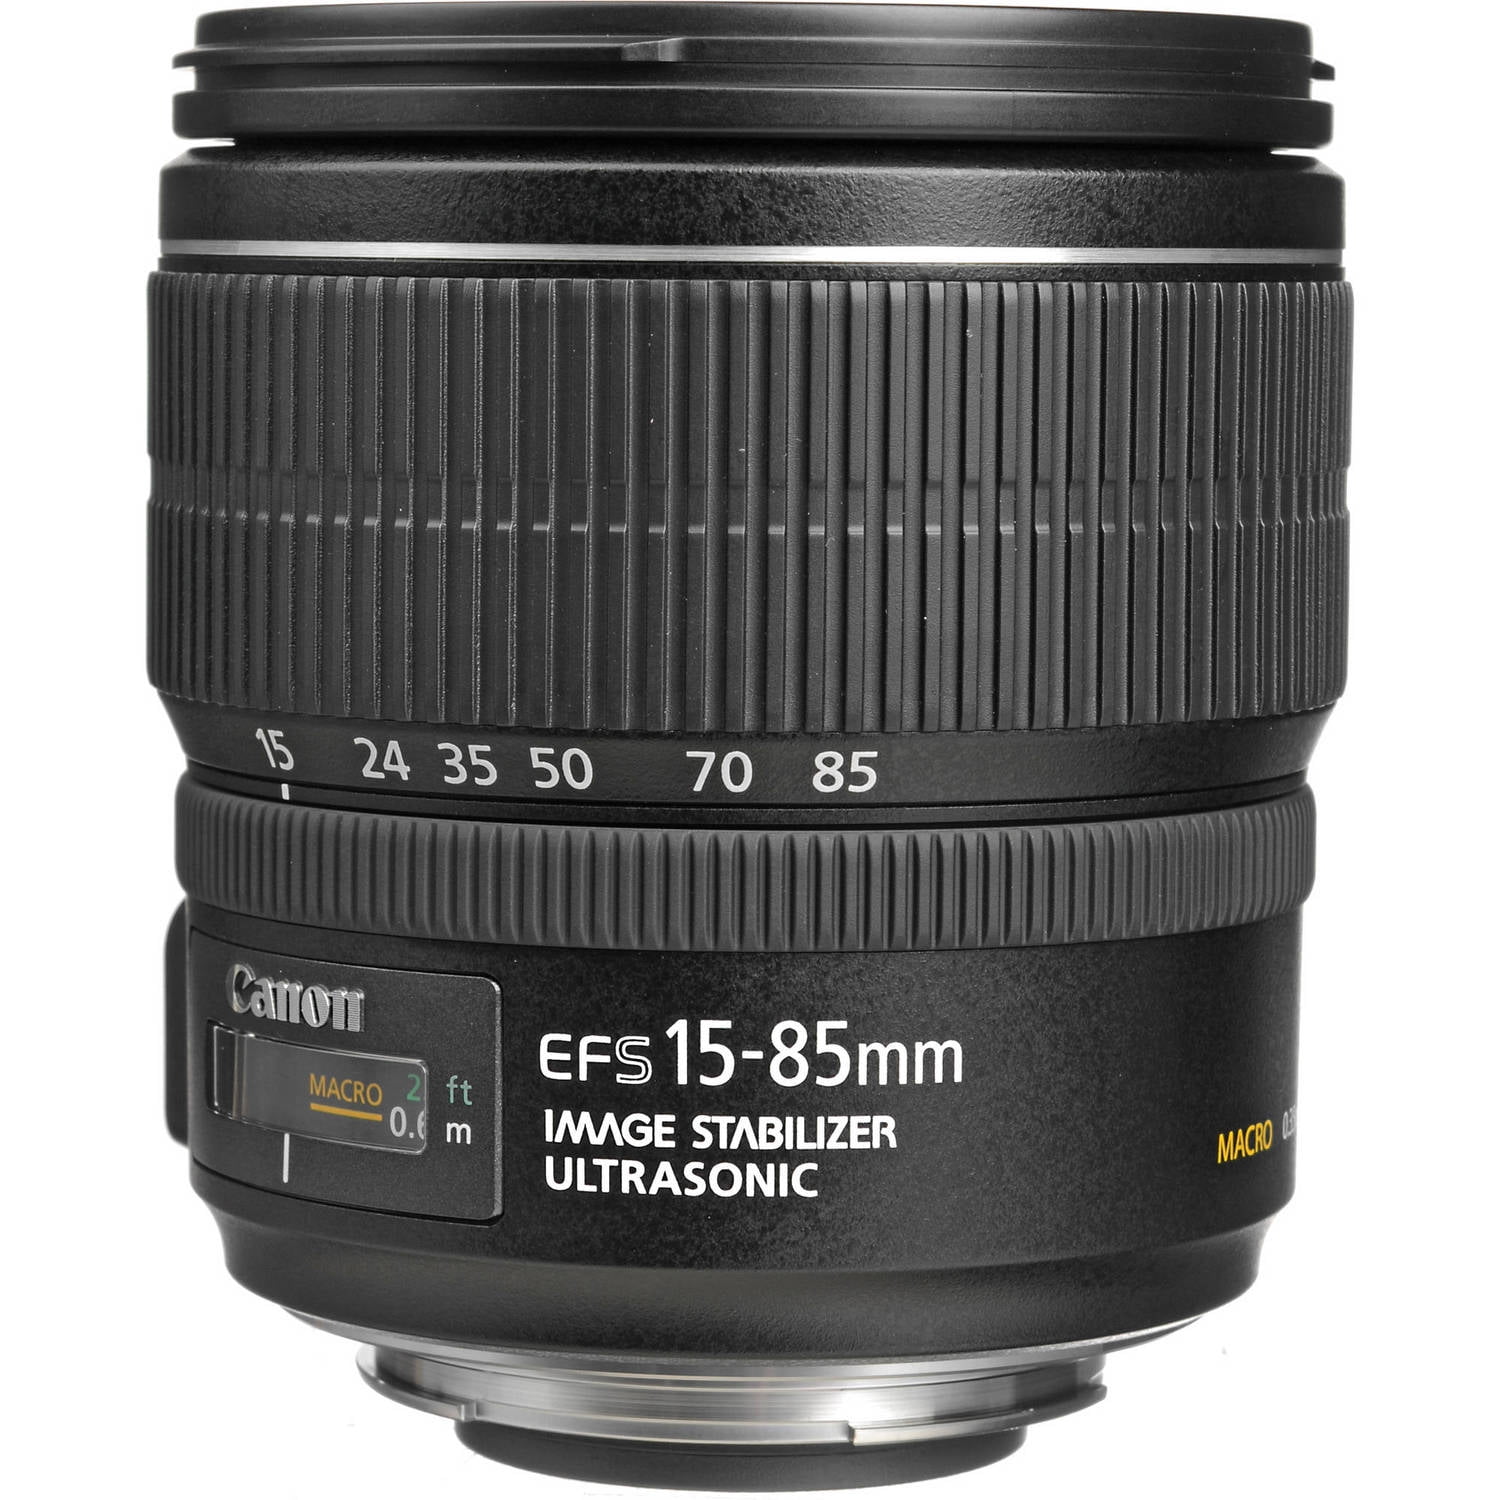 Canon EF-S (15-85mm) f/3.5-5.6 IS USM Lens